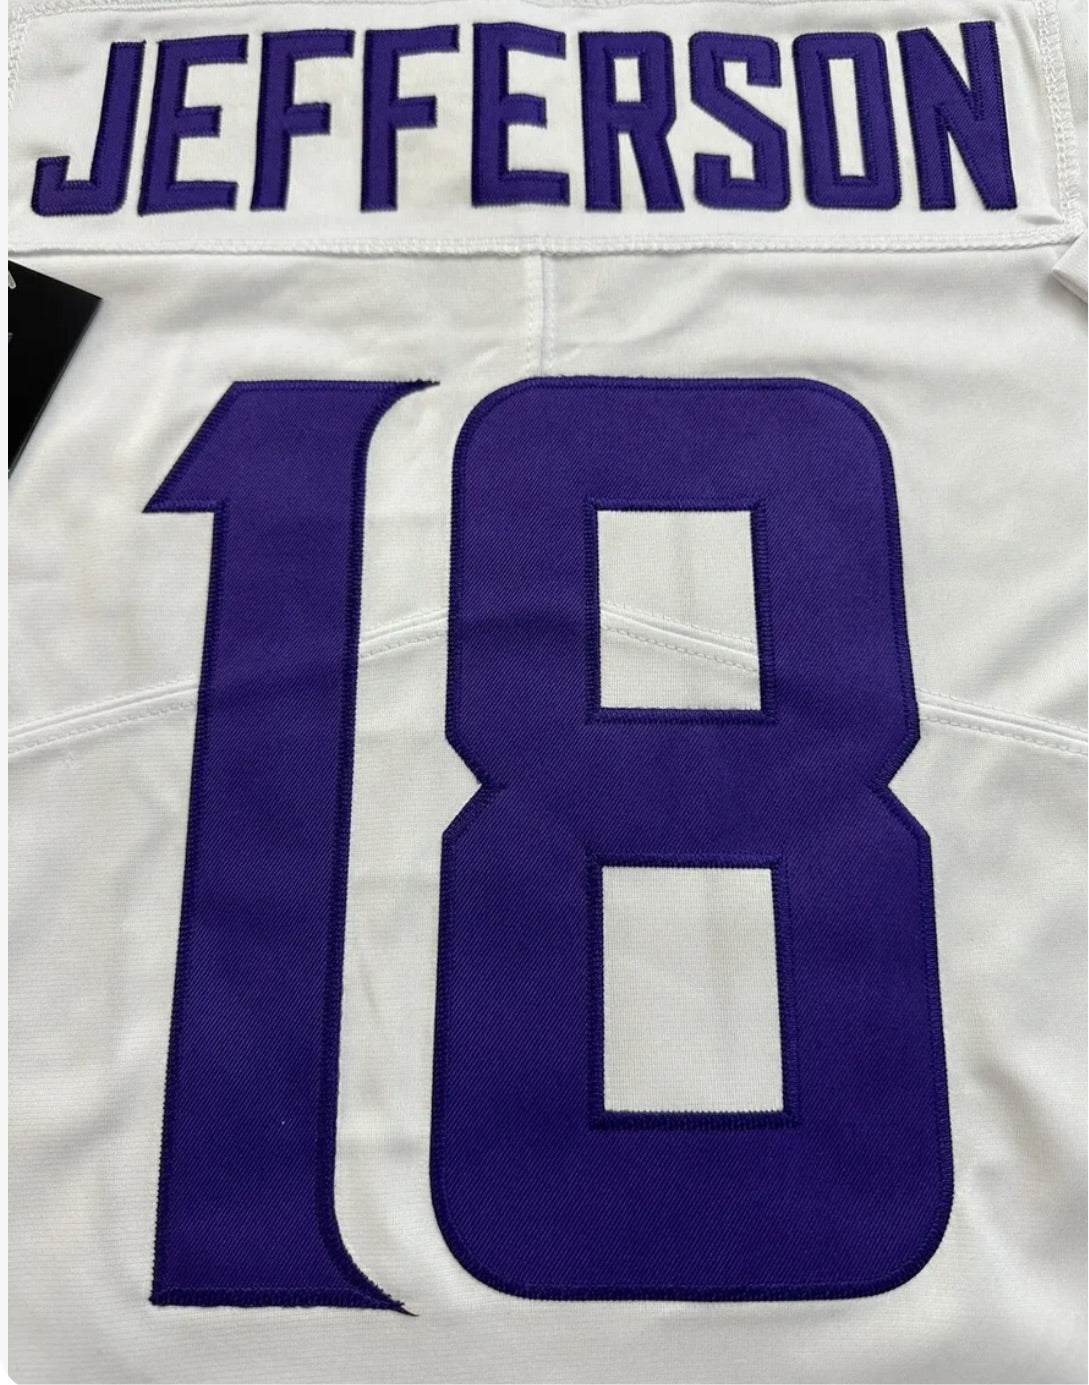 Justin Jefferson Minnesota Vikings NFL Nike Vapor Limited Away Player Jersey